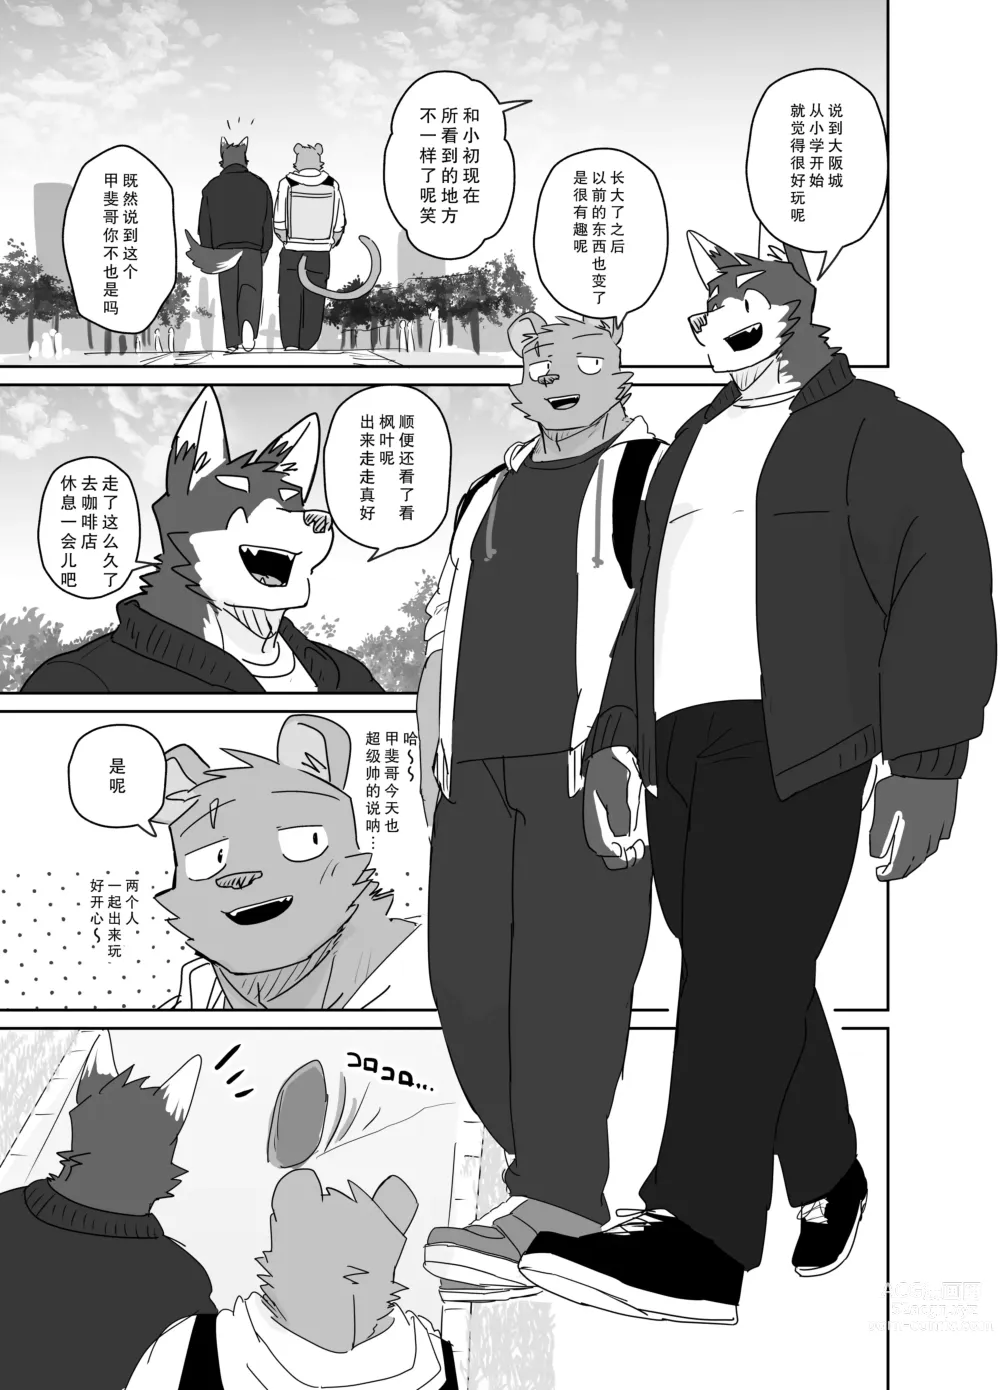 Page 1 of manga 飞盘